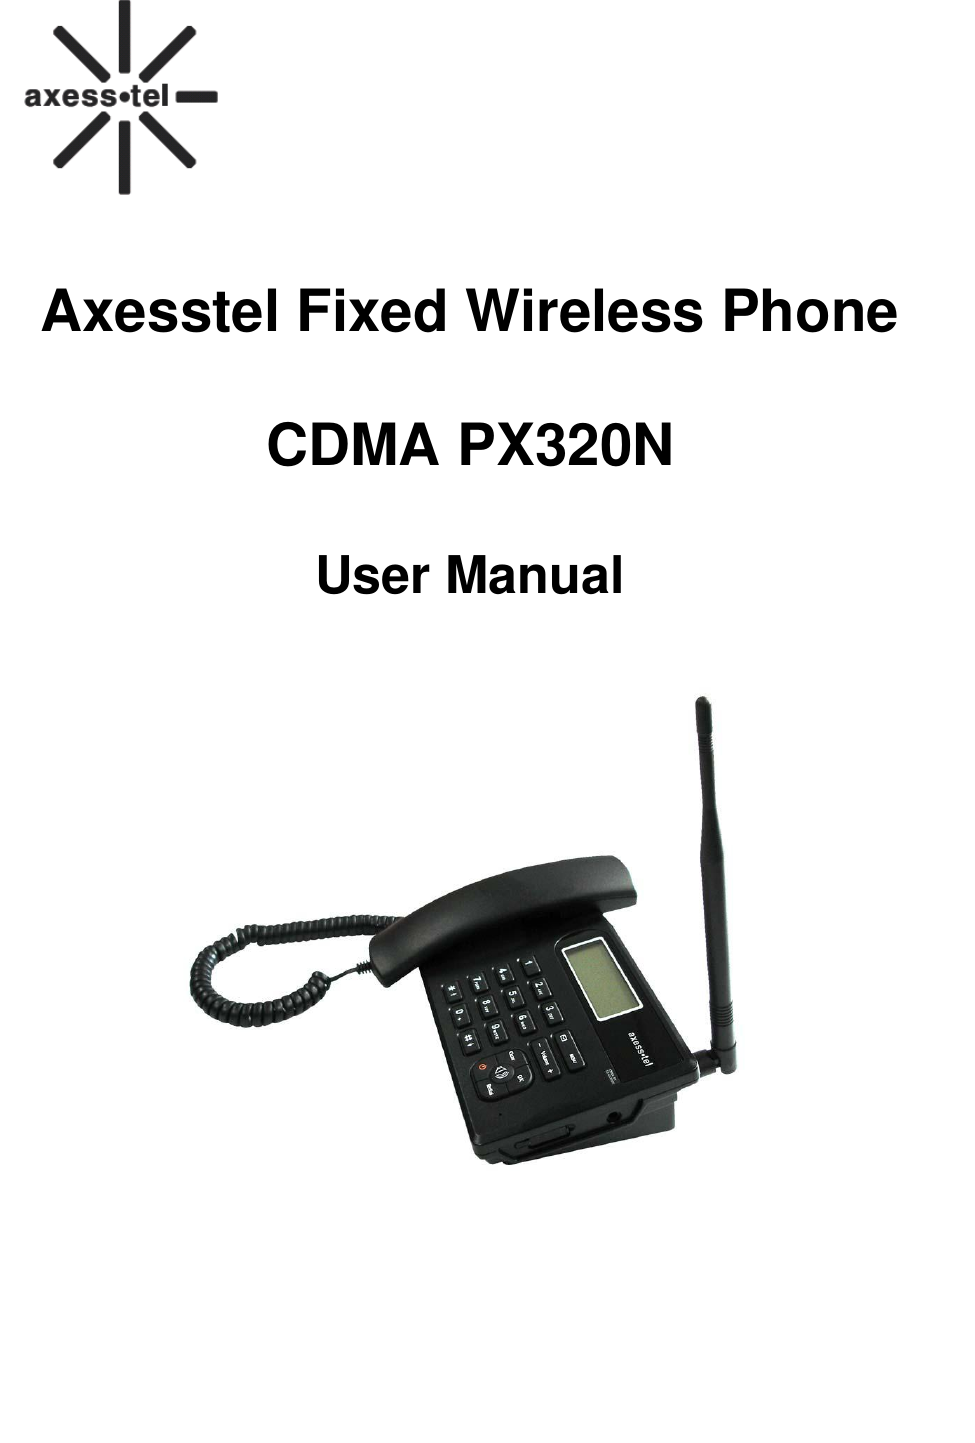      Axesstel Fixed Wireless Phone  CDMA PX320N   User Manual              